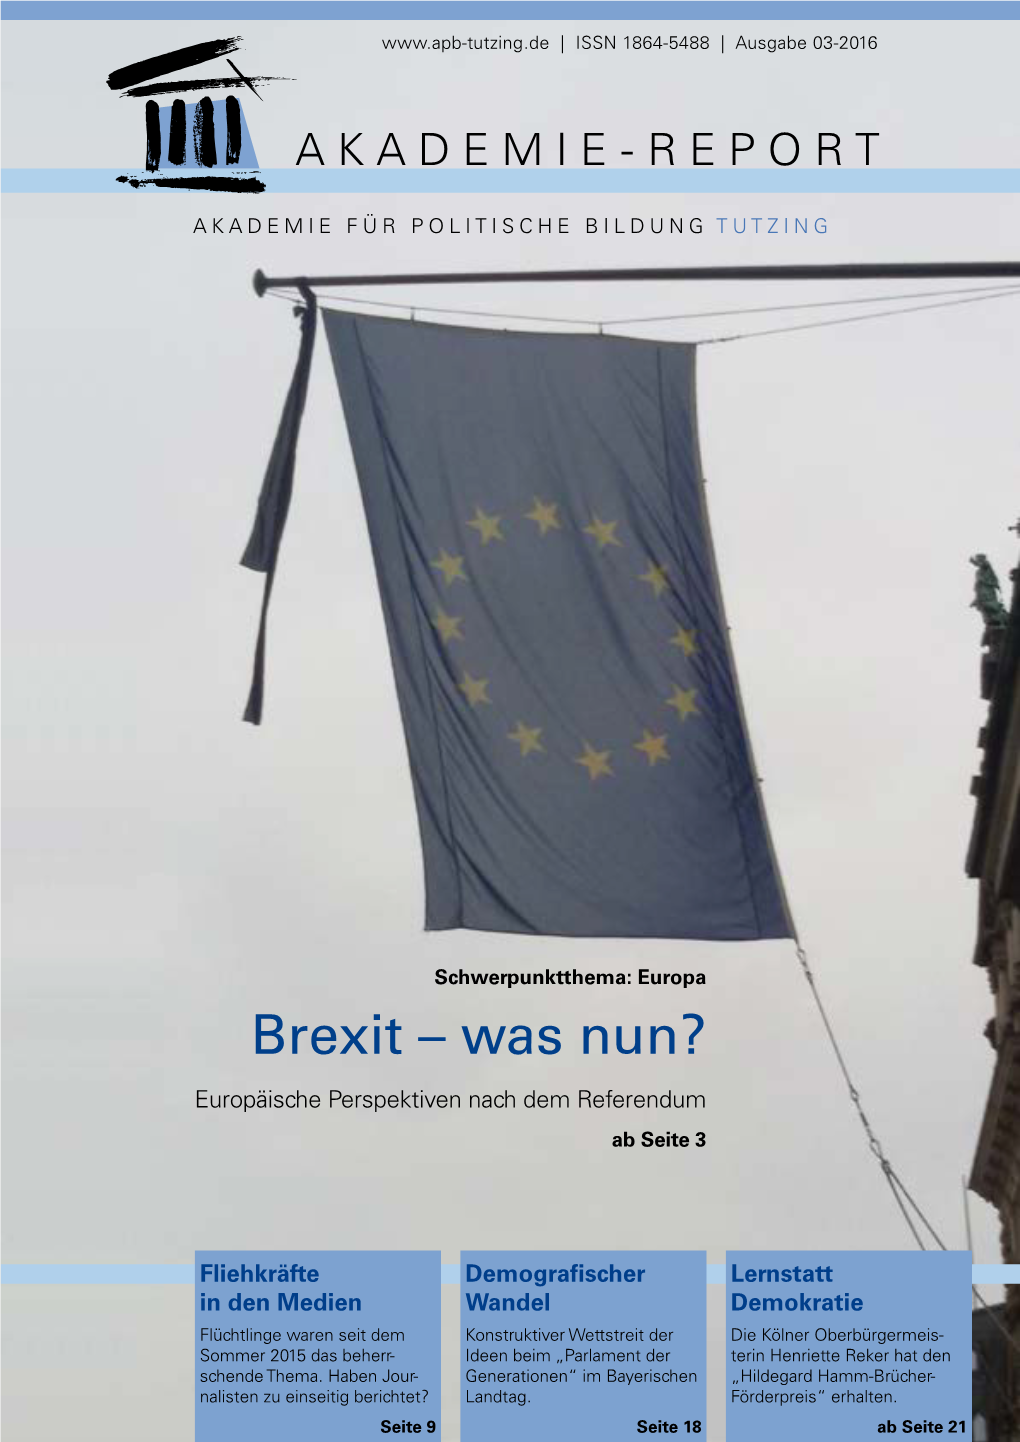 Europa: Brexit